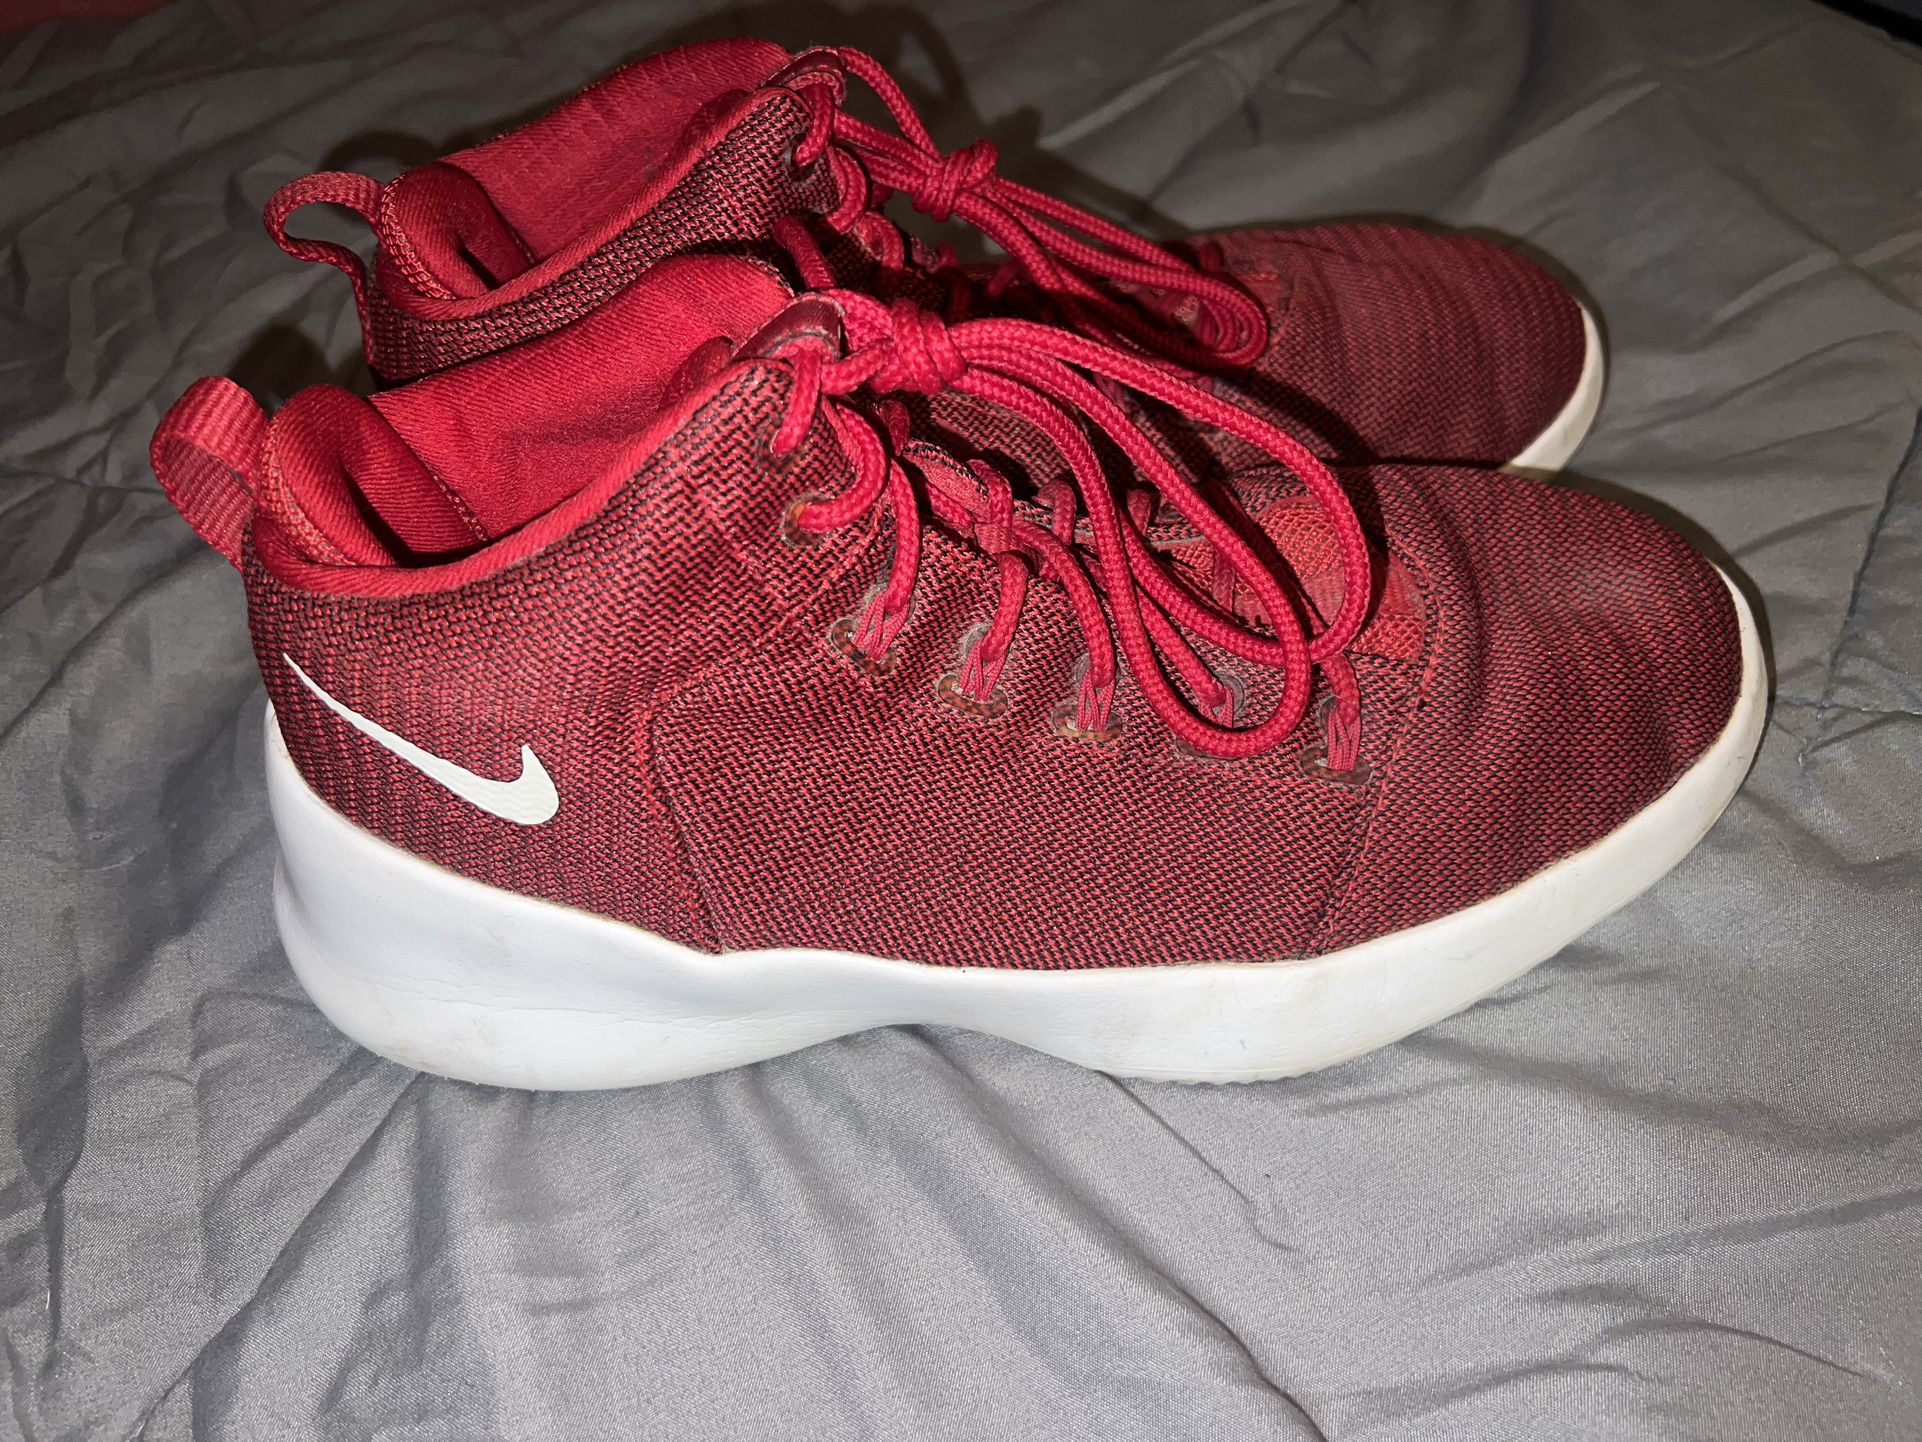 Nike Mens Hyperfr3sh 759996-601 Red Basketball Shoes